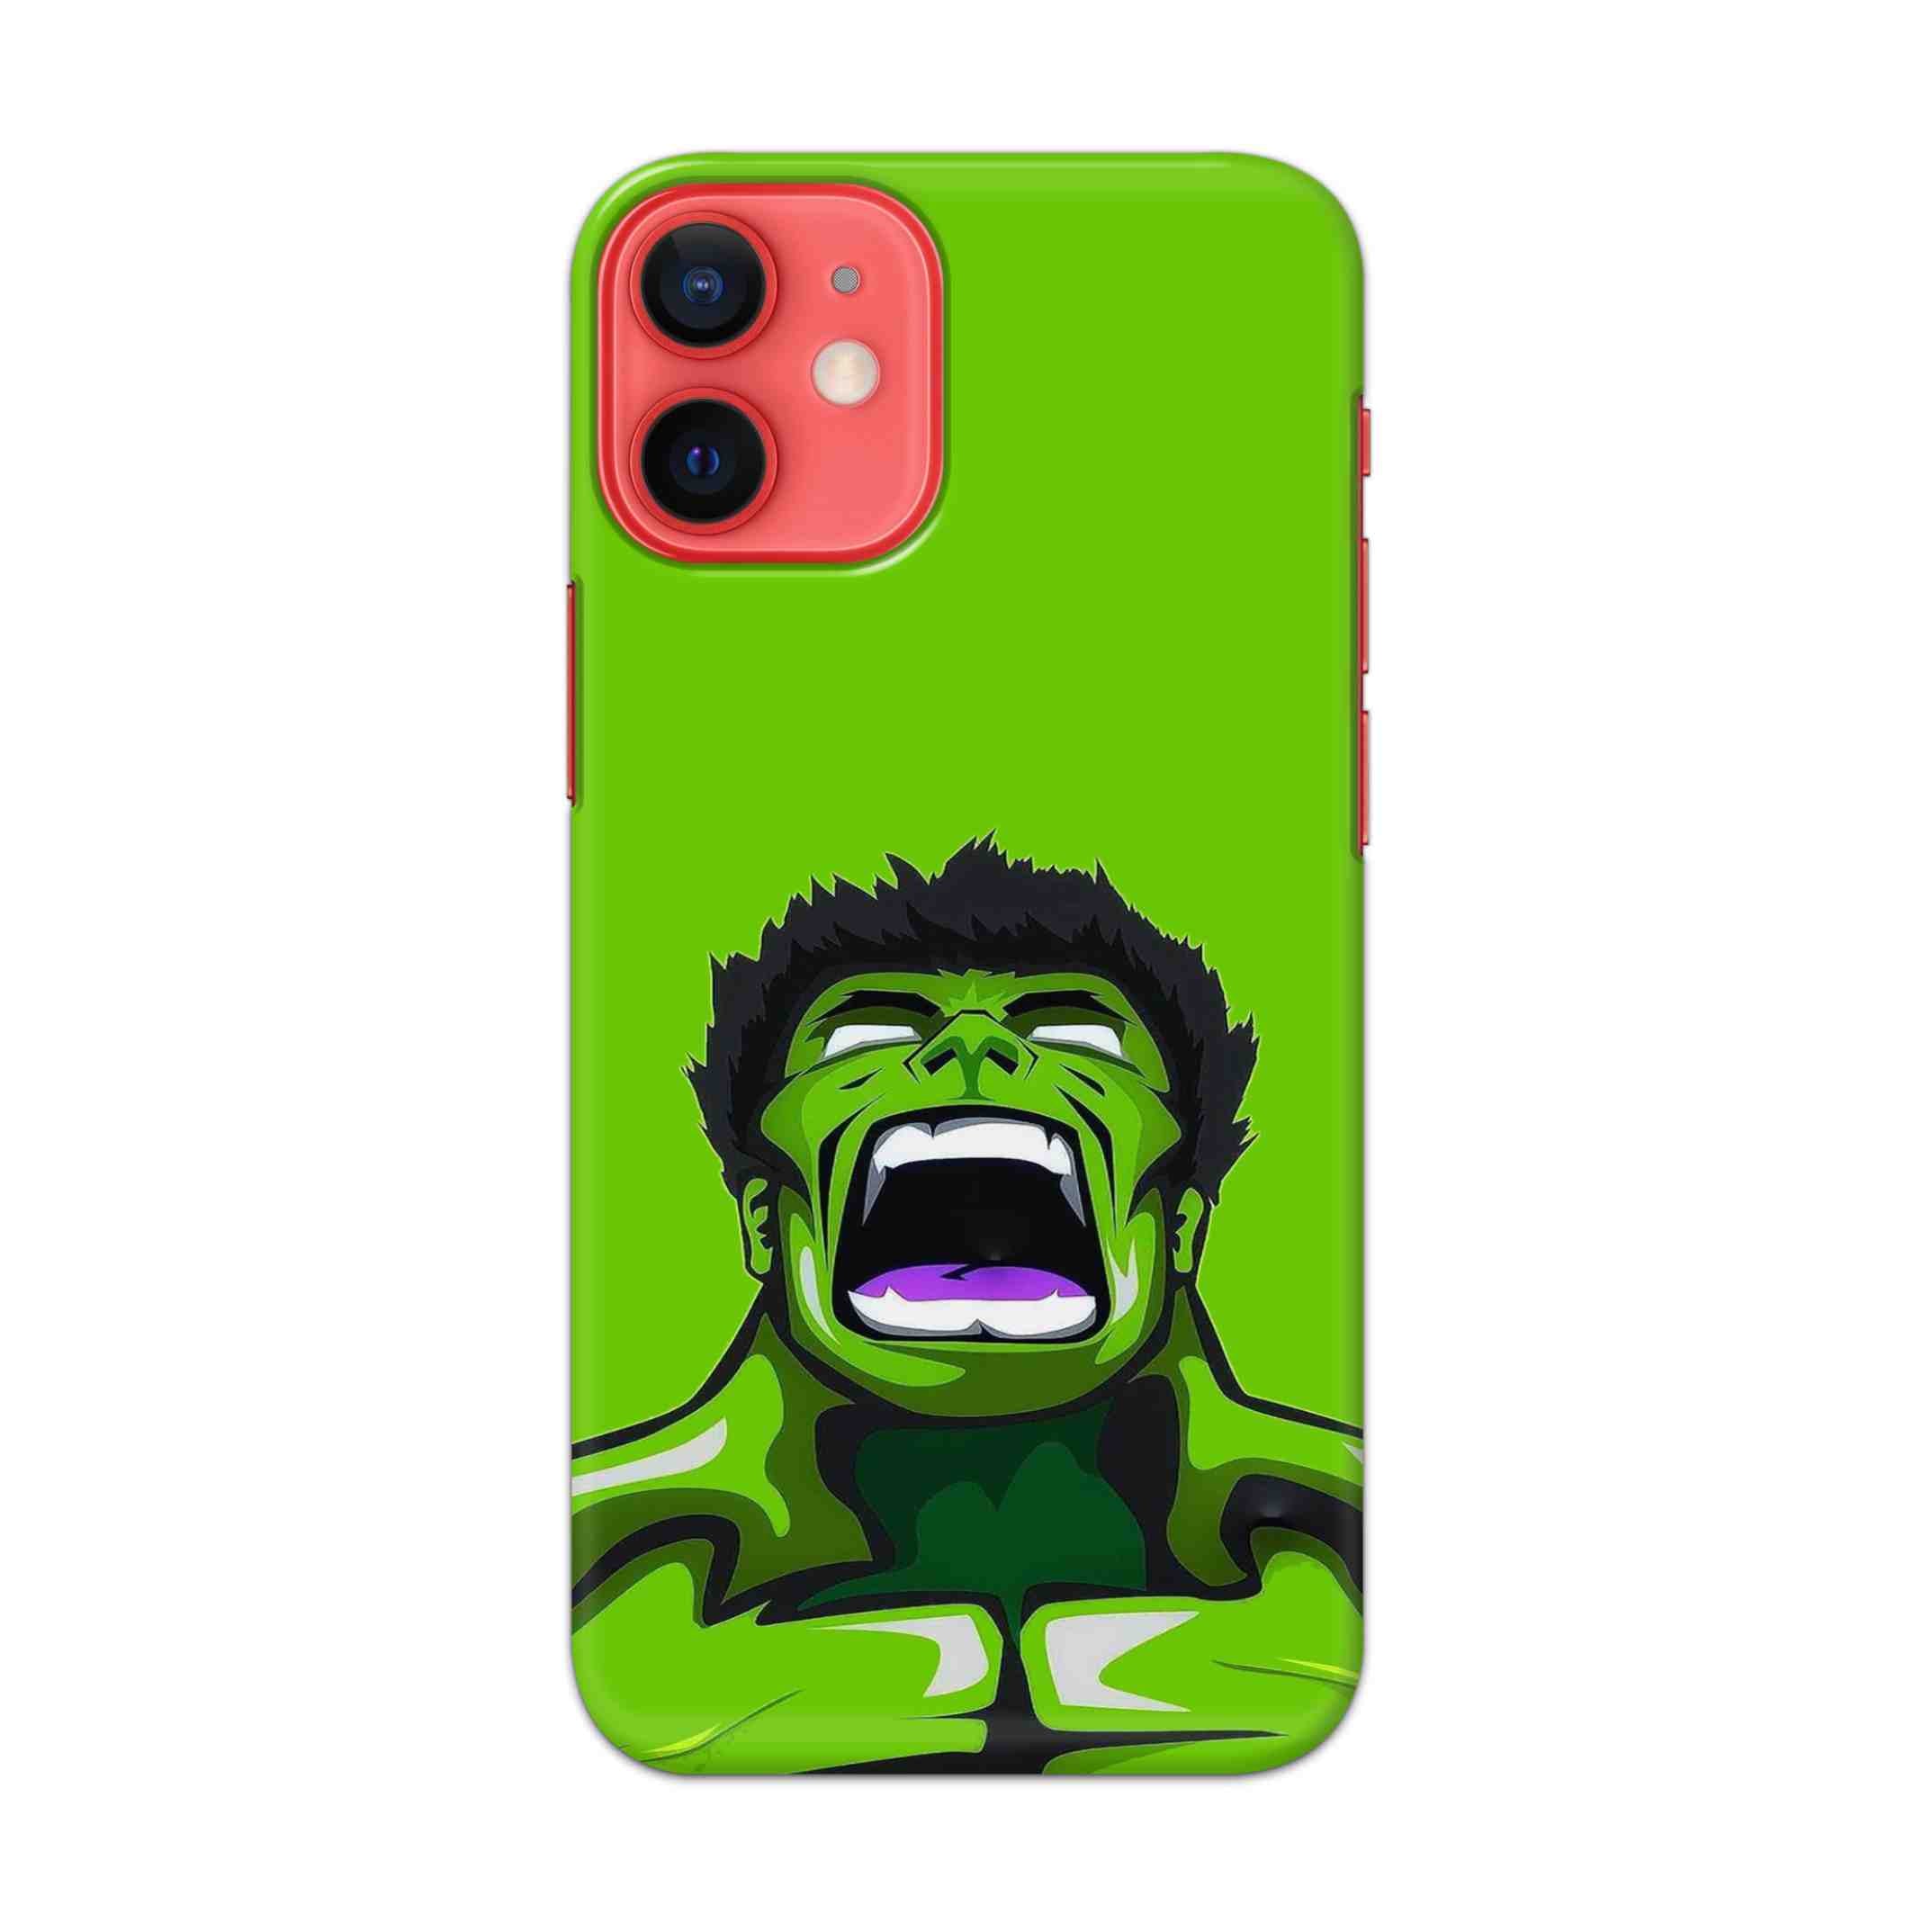 Buy Green Hulk Hard Back Mobile Phone Case/Cover For Apple iPhone 12 mini Online